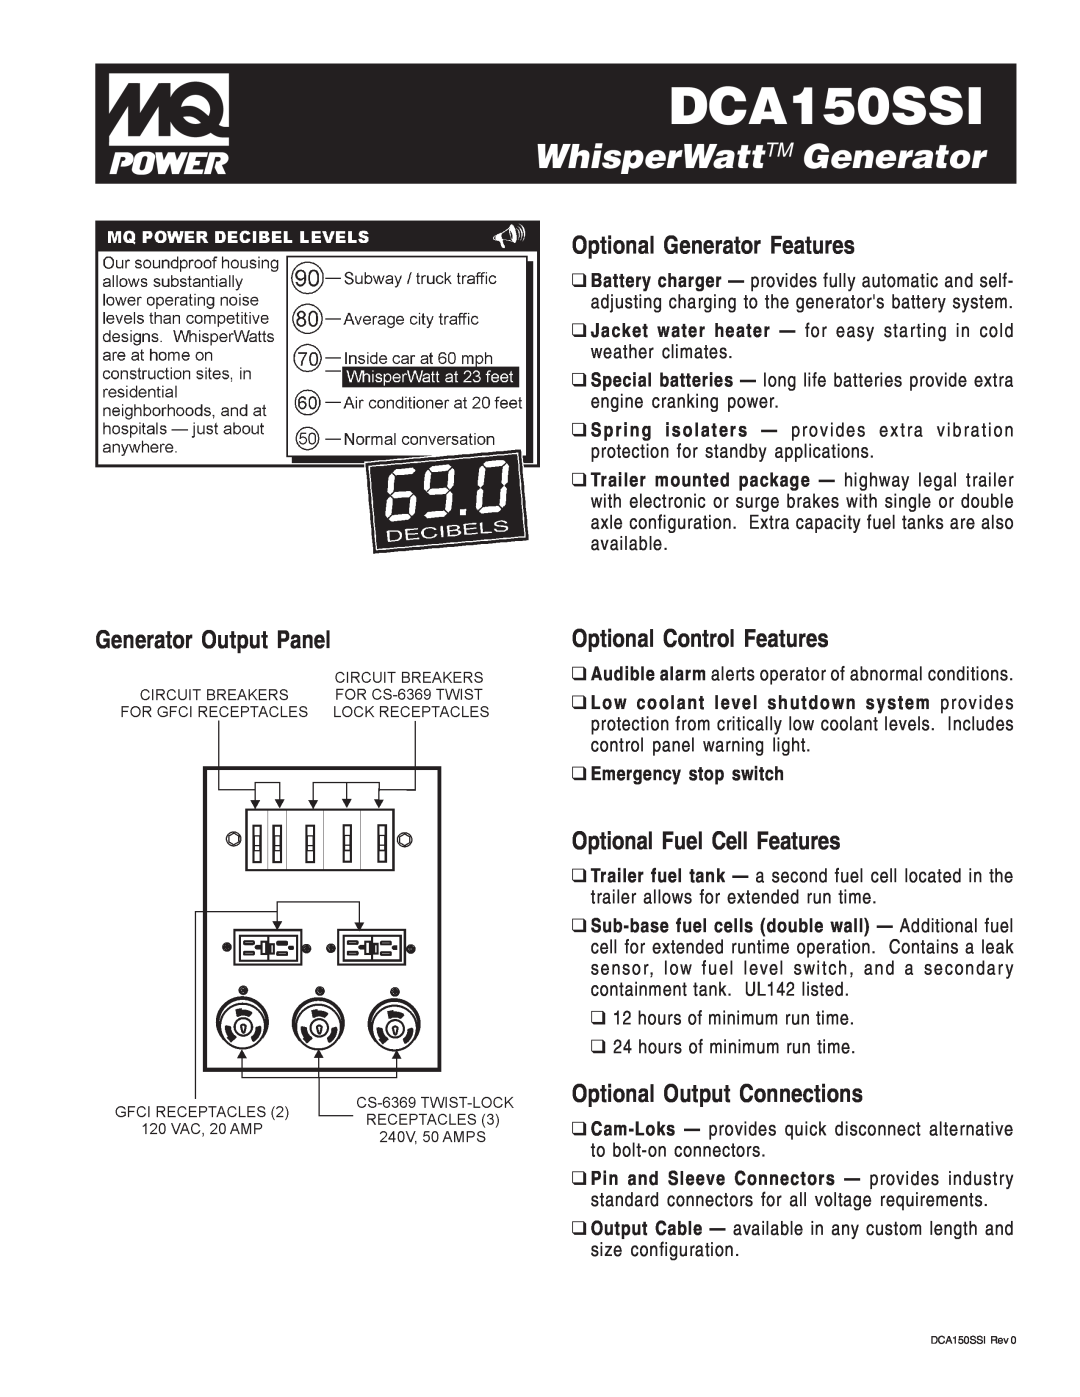 Multiquip DCA150SSI manual Optional Generator Features, Generator Output Panel, Optional Control Features 